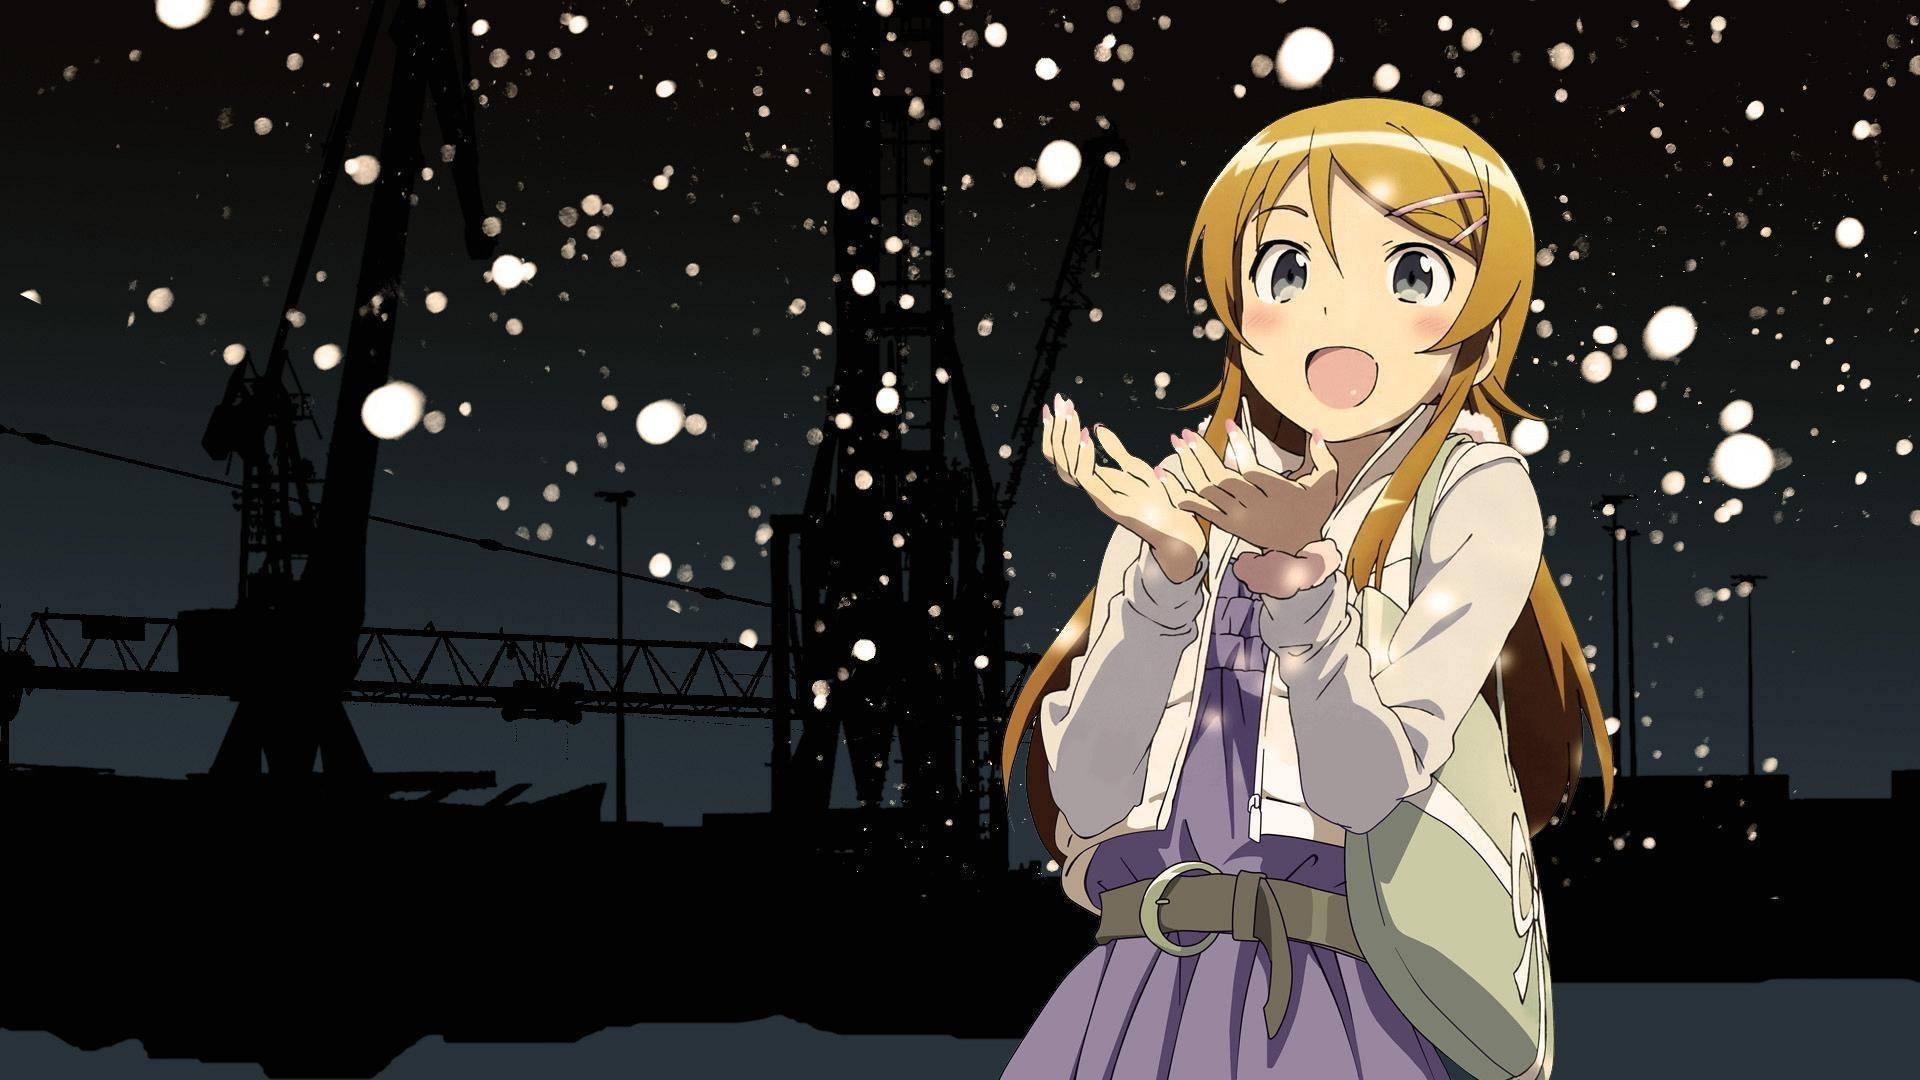 Kawaii Hd Anime Girl Catching Snow Background